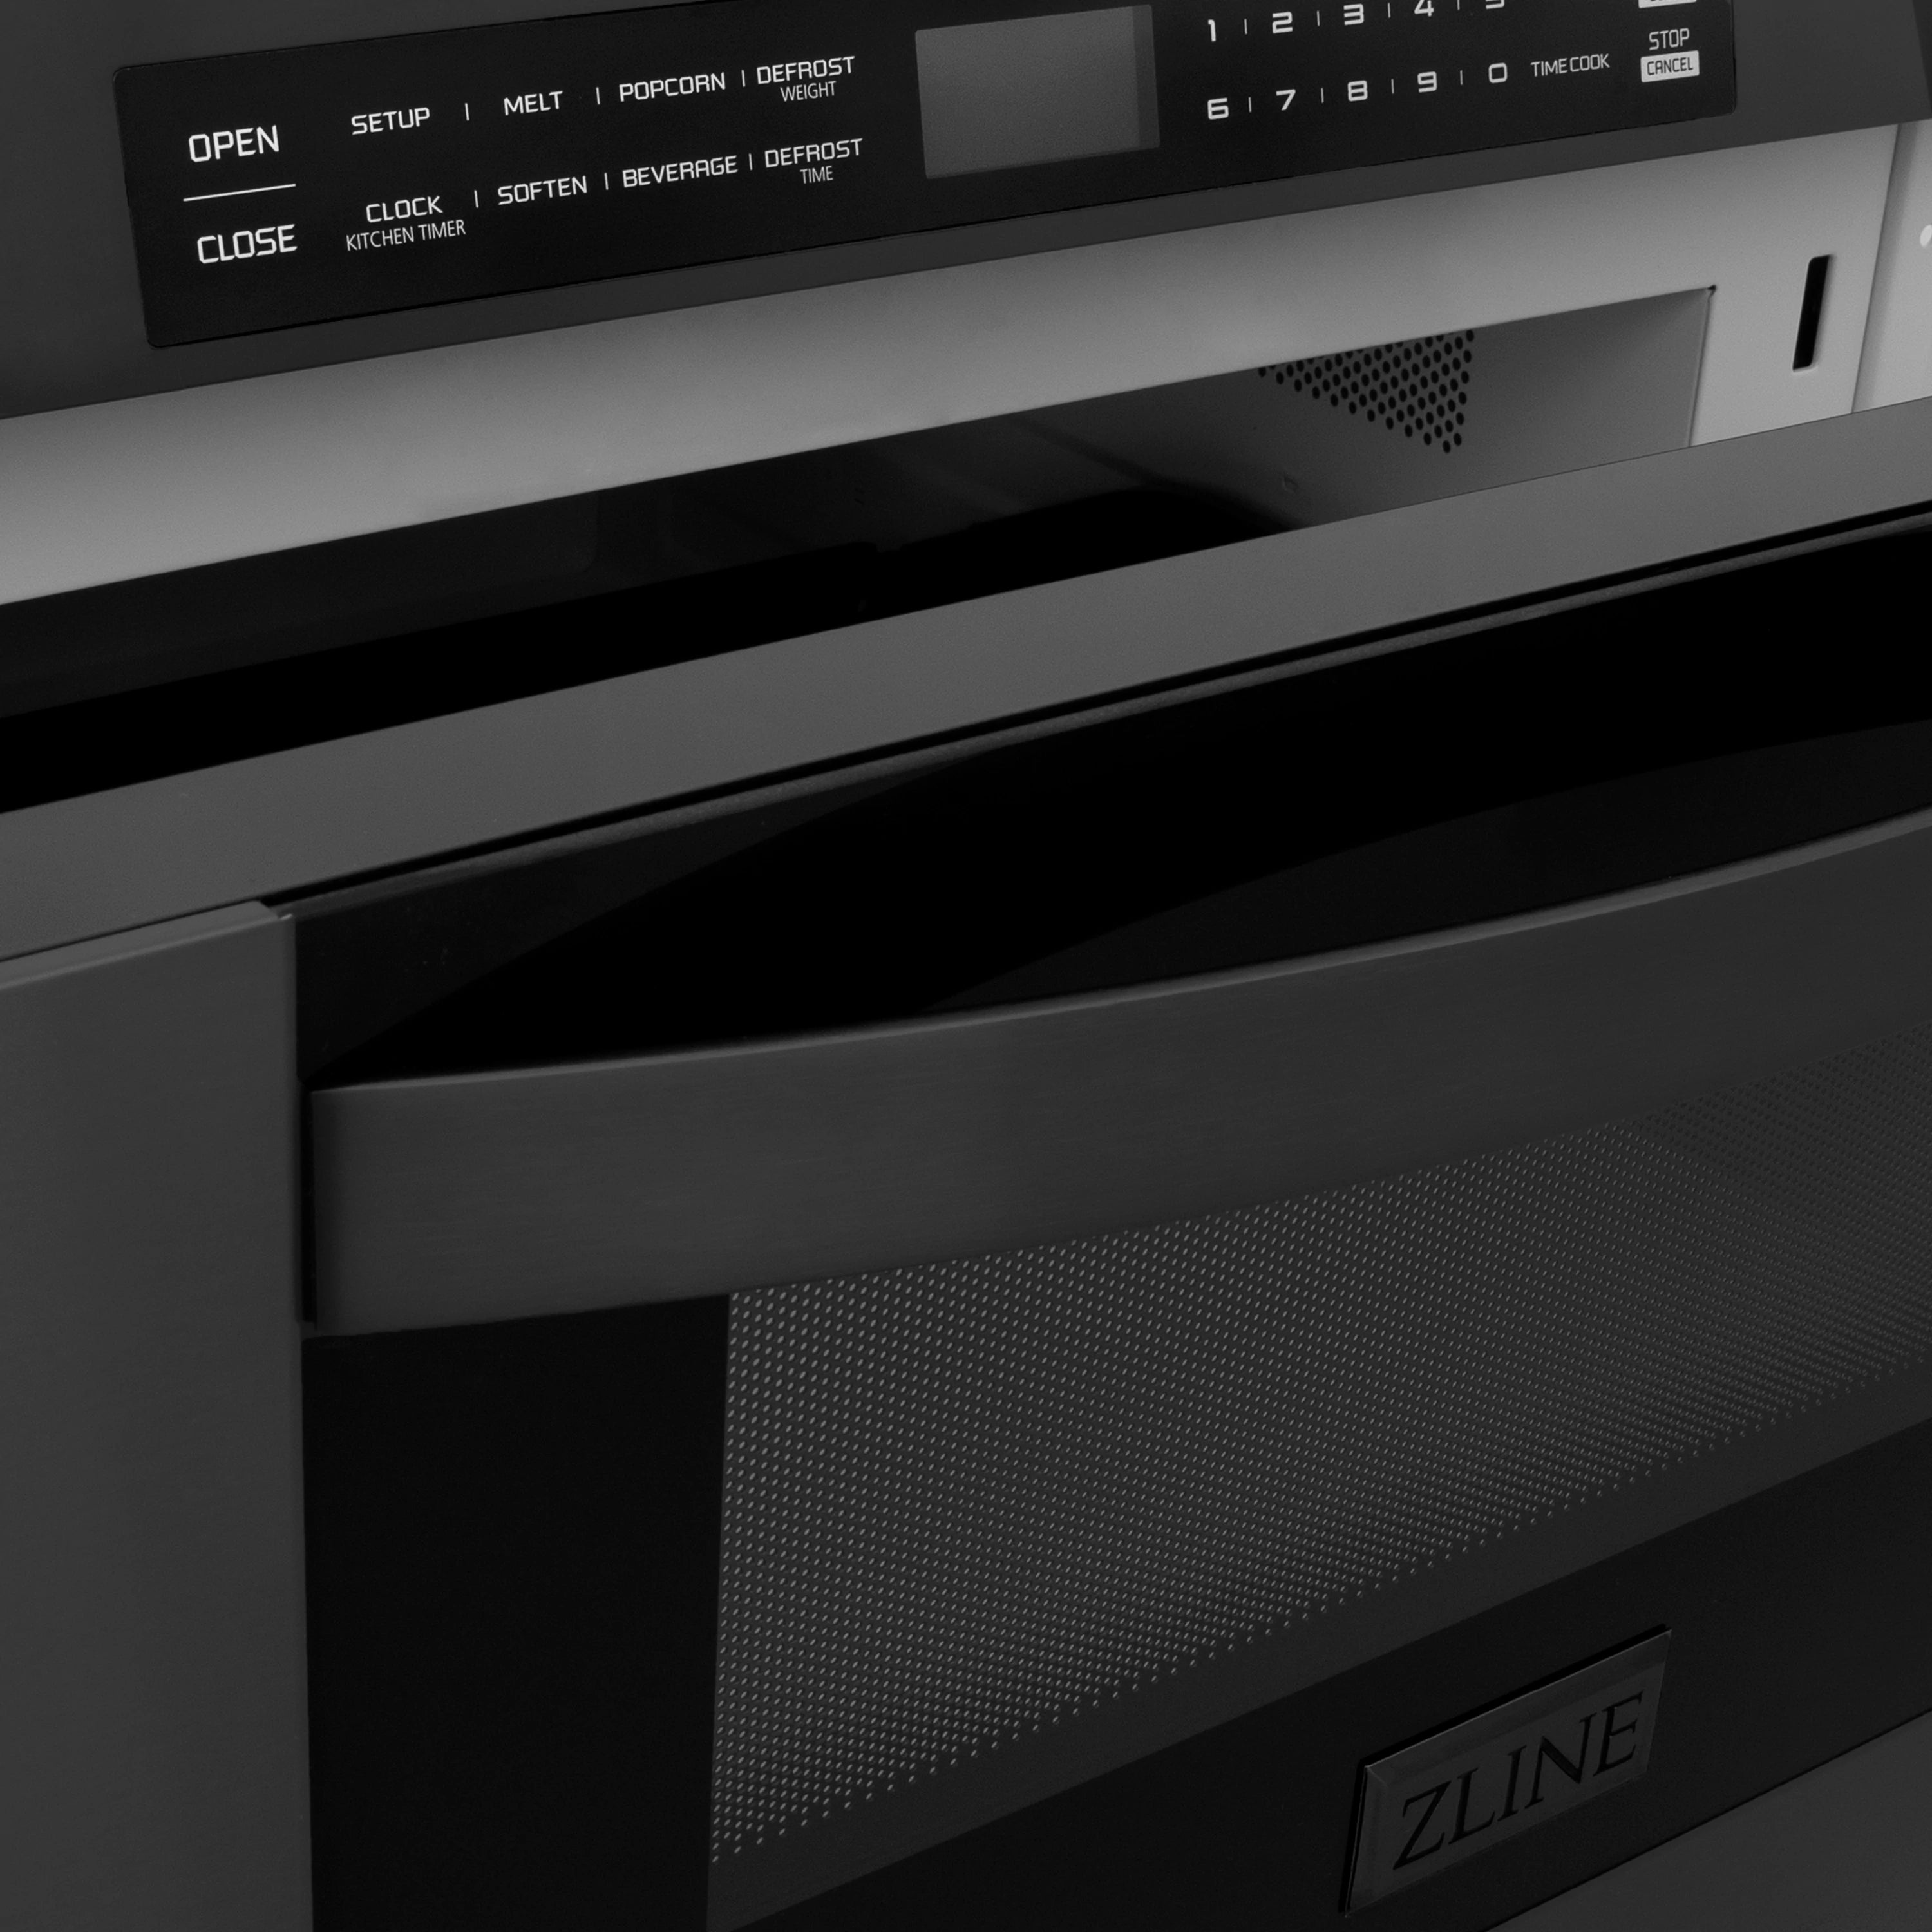 ZLINE 24" 1.2 cu. ft. Built-in Microwave Drawer in Stainless Steel (MWD-1)